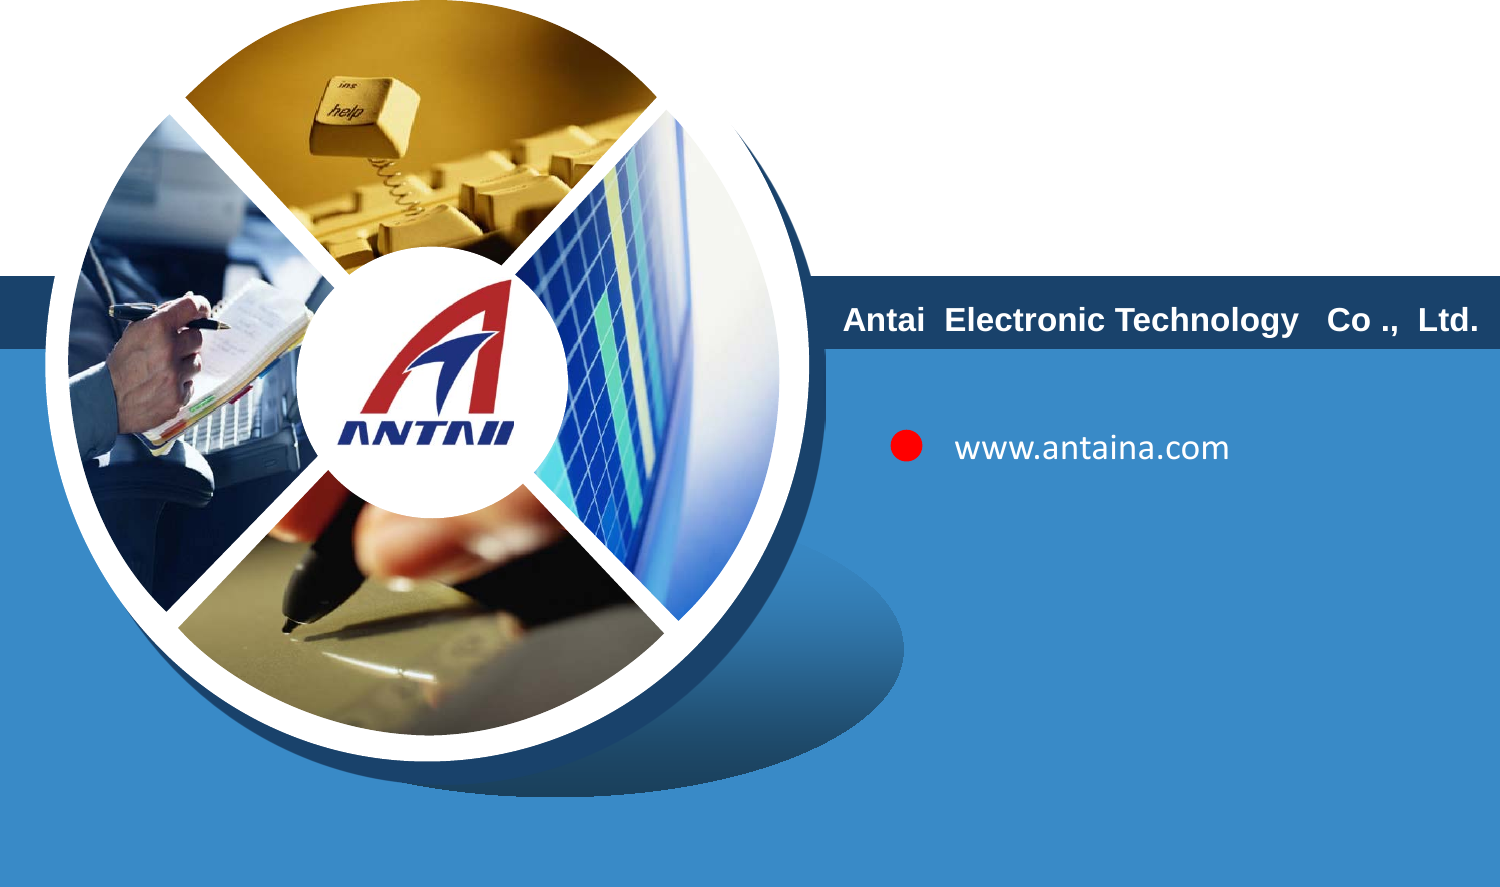 Antai  Electronic Technology   Co .,  Ltd.www.antaina.com